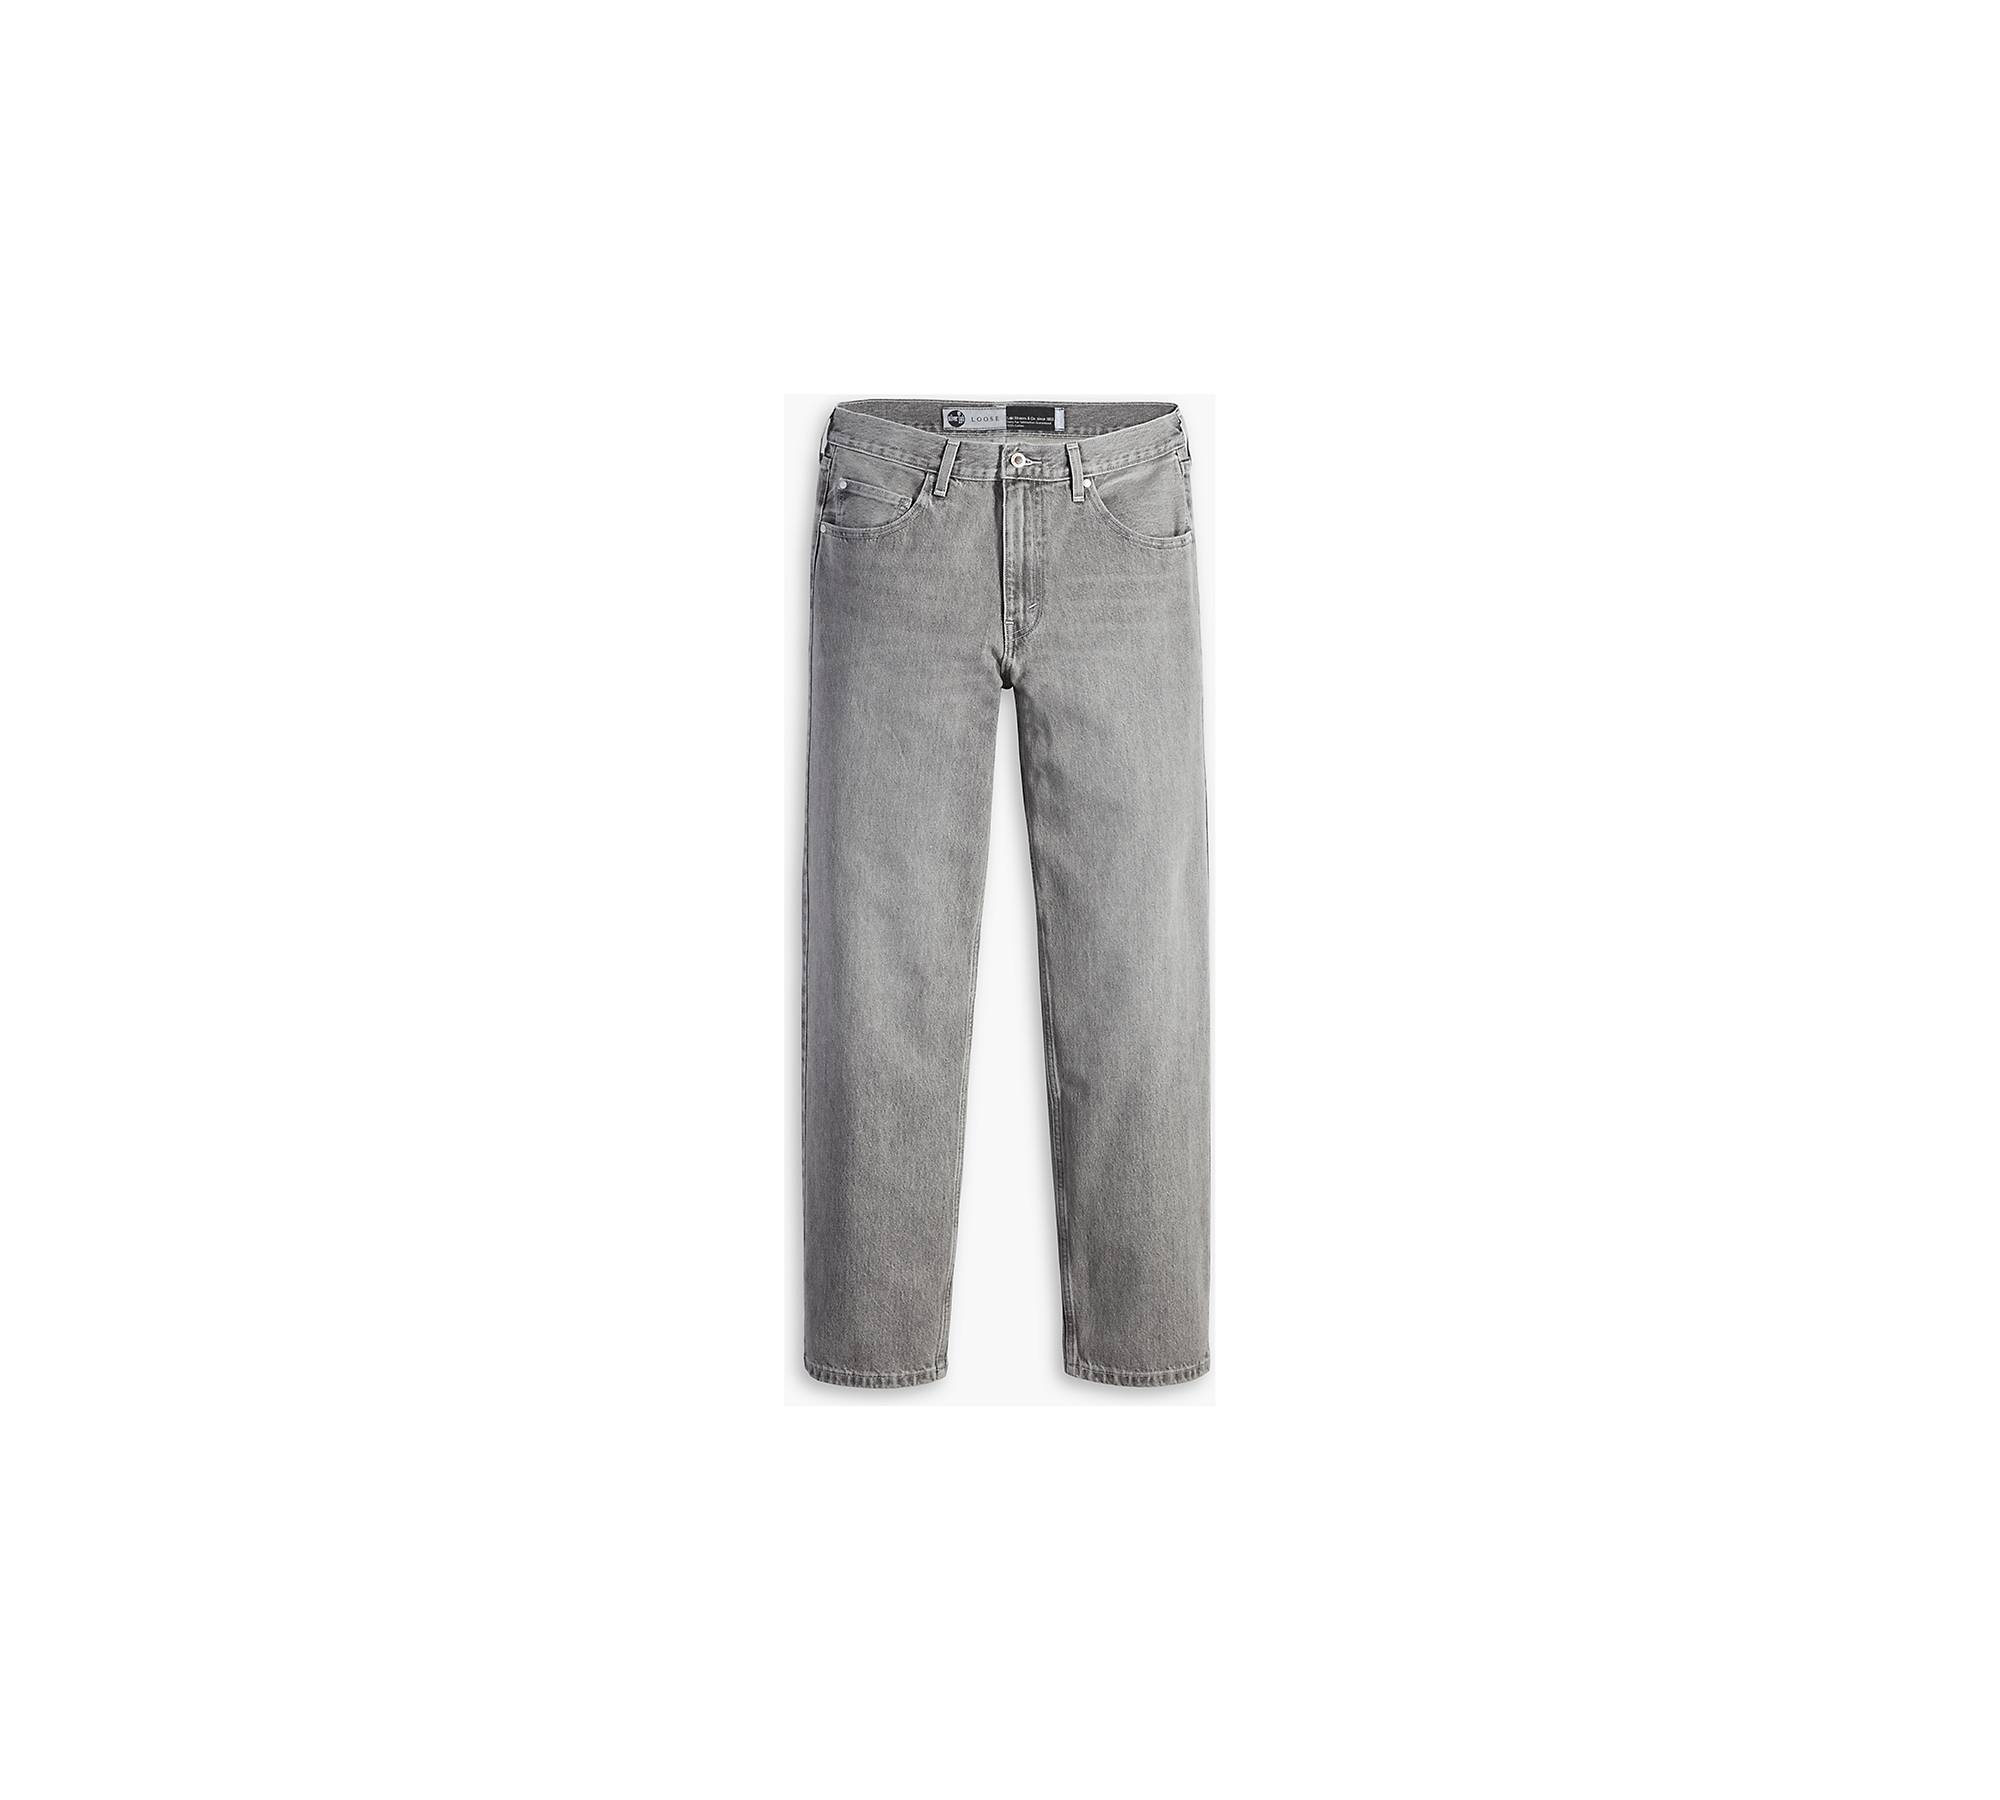 Men's Grey Loose Jeans, Men's Bottoms